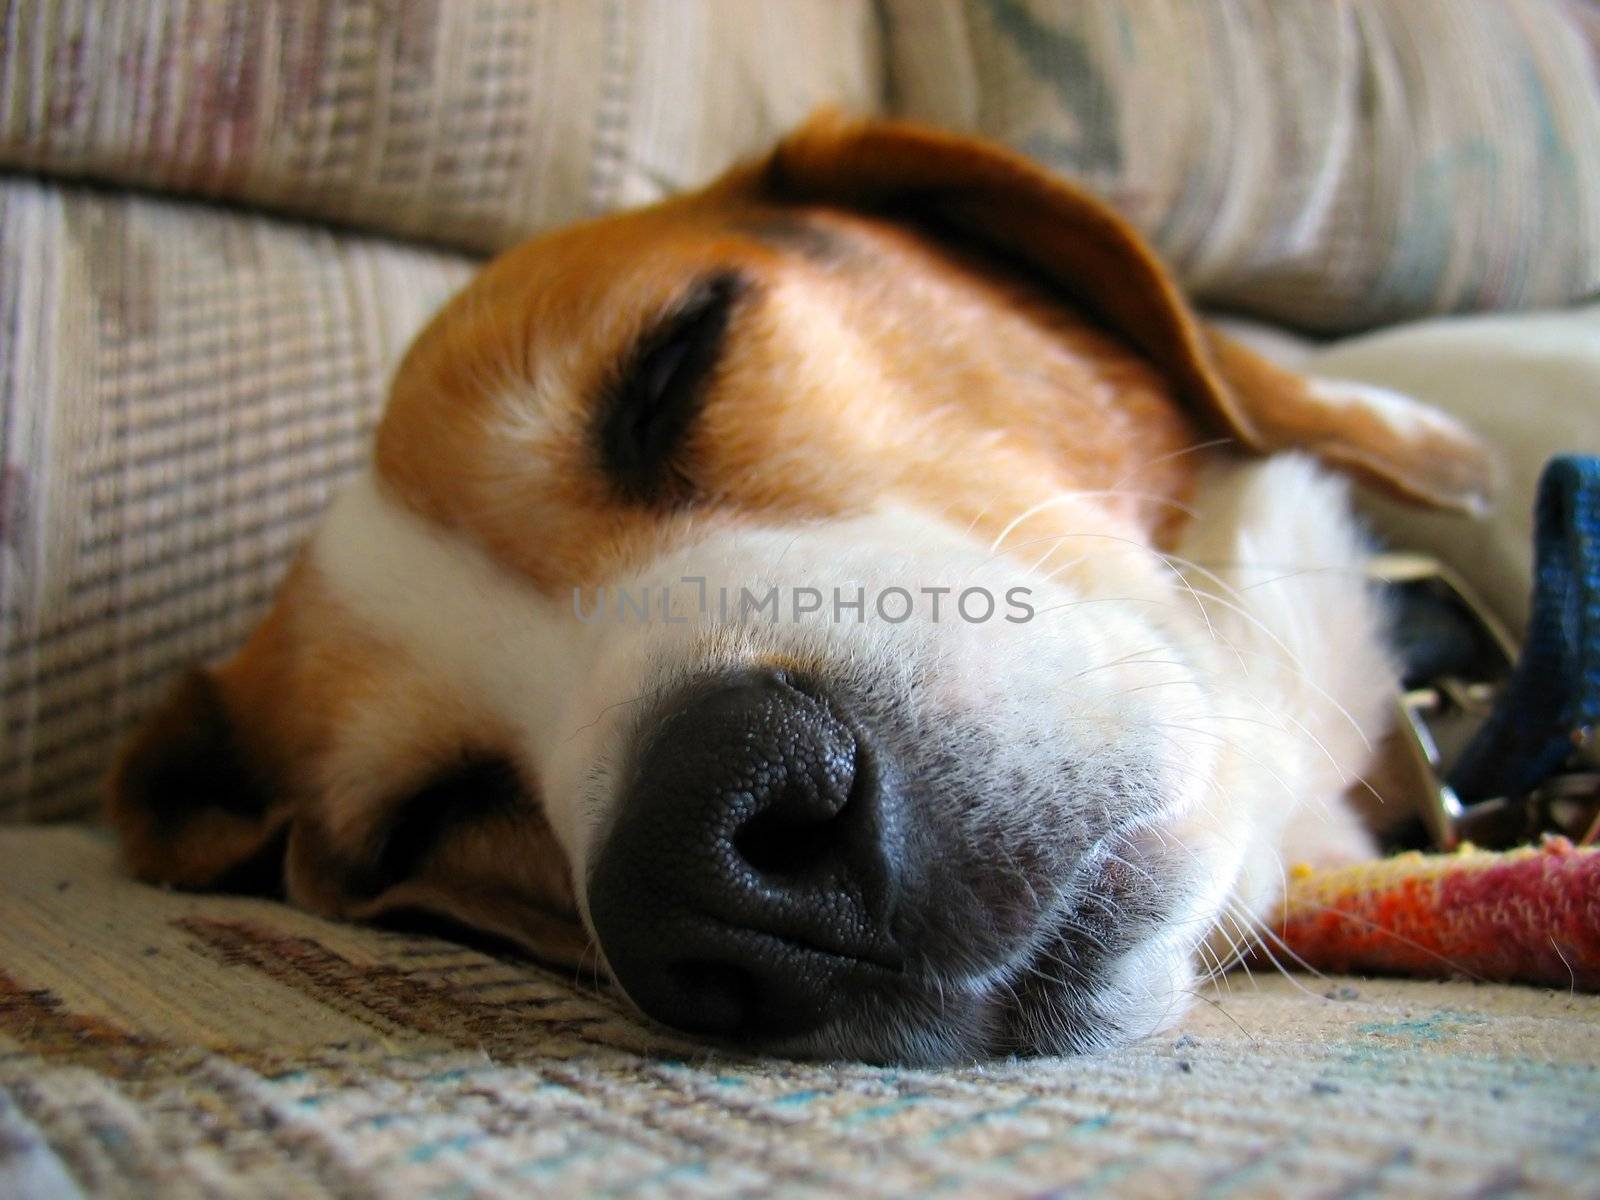 A macro shot of a sleepy beagle dog's nose and face.